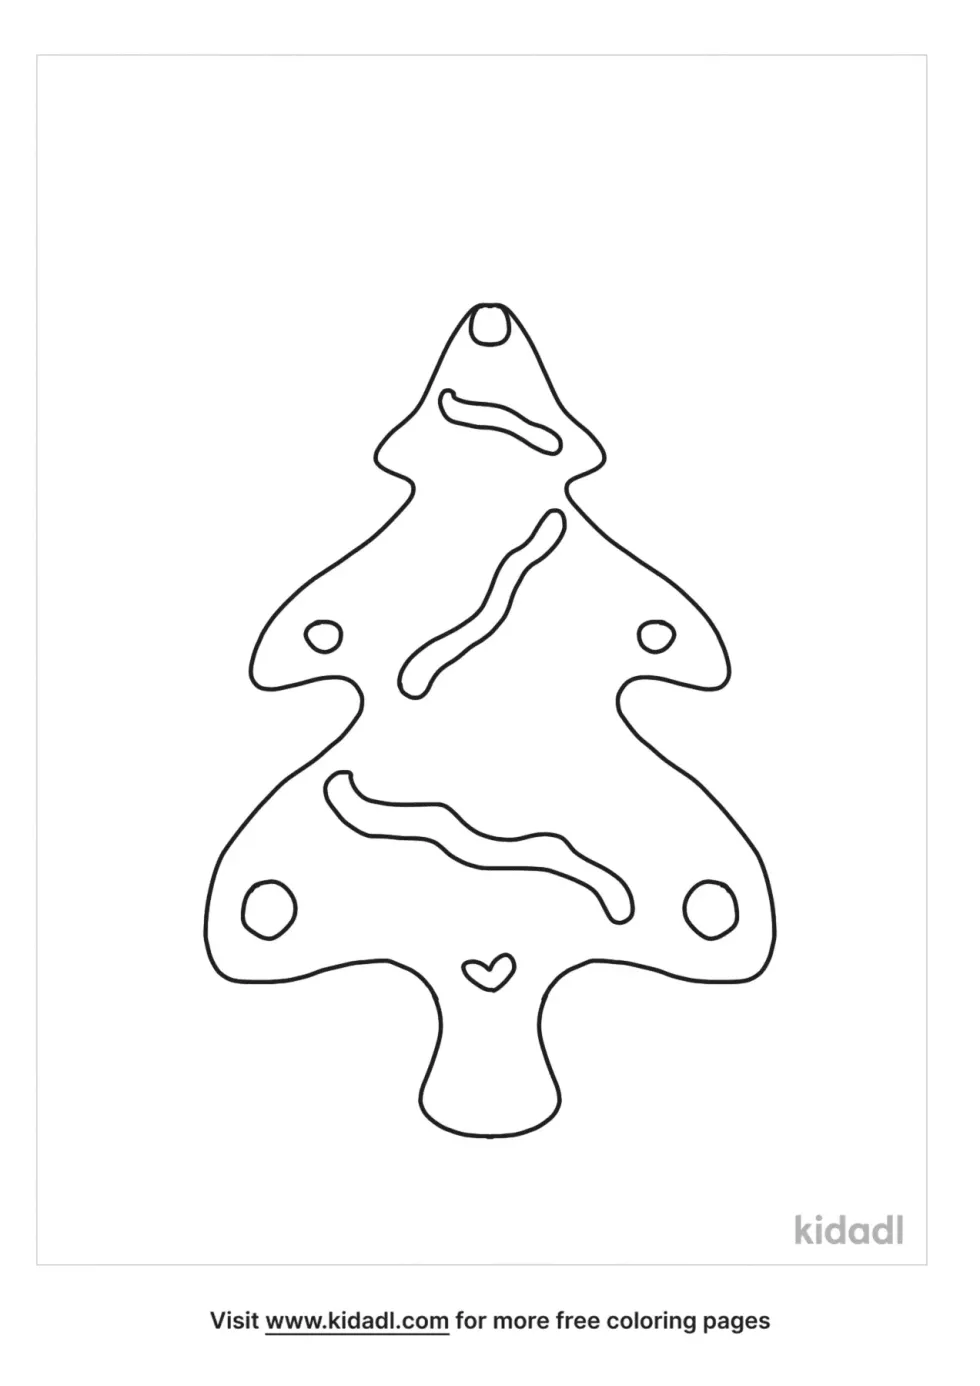 Christmas Tree Shaped Cookie